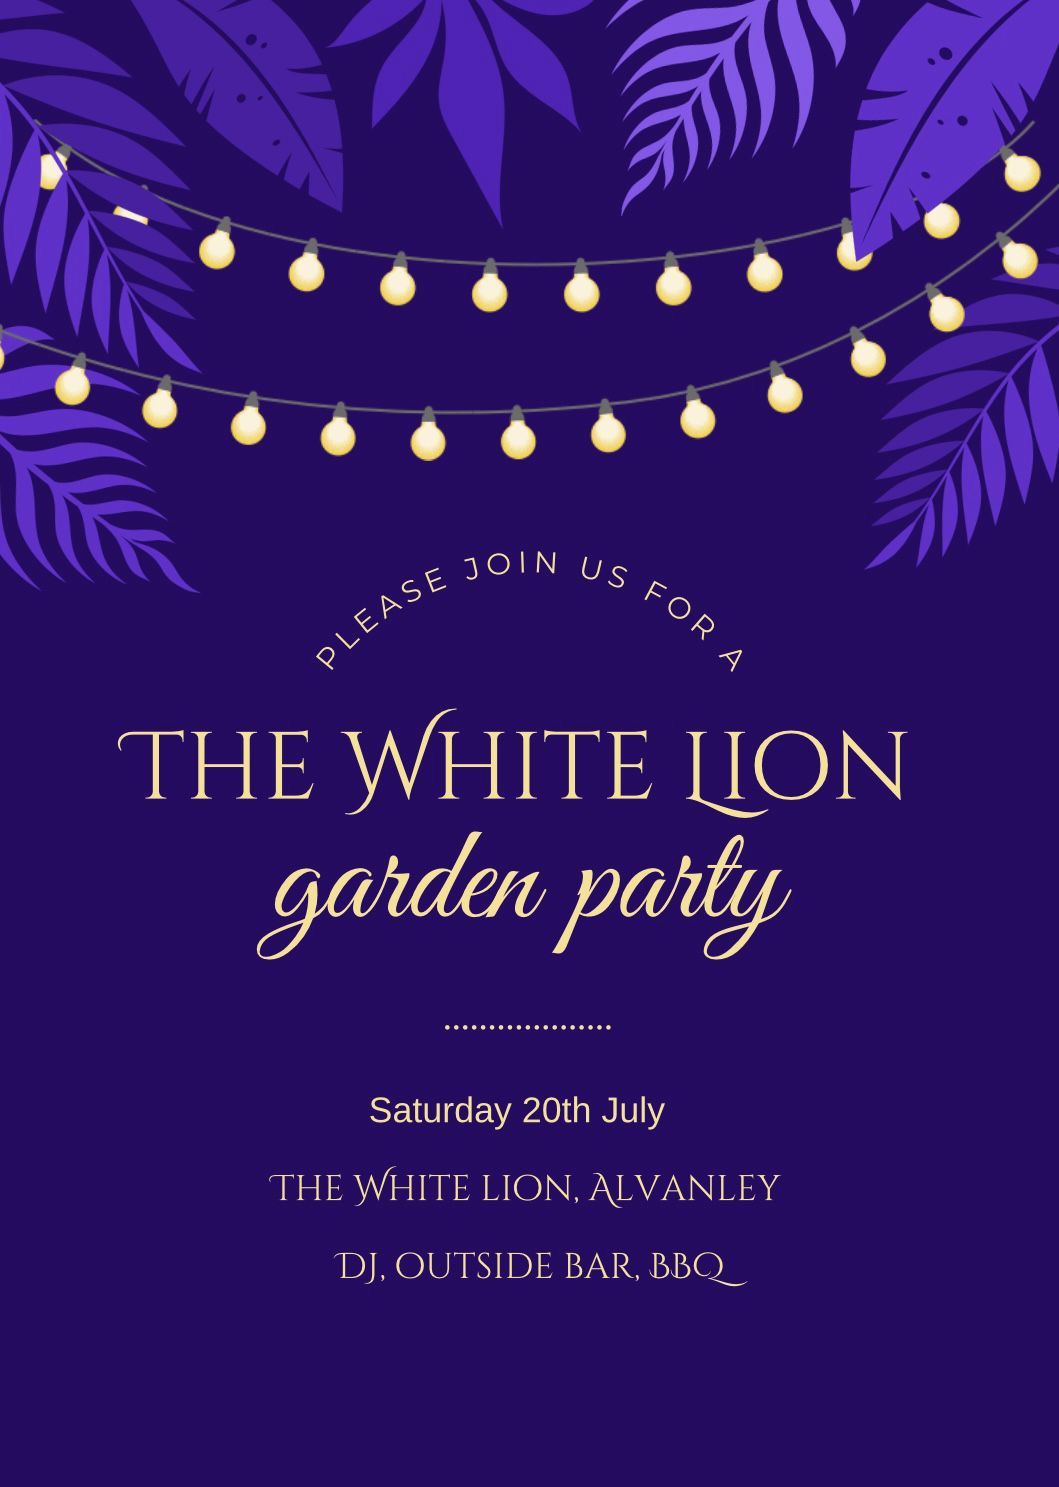 The White Lion Garden Party